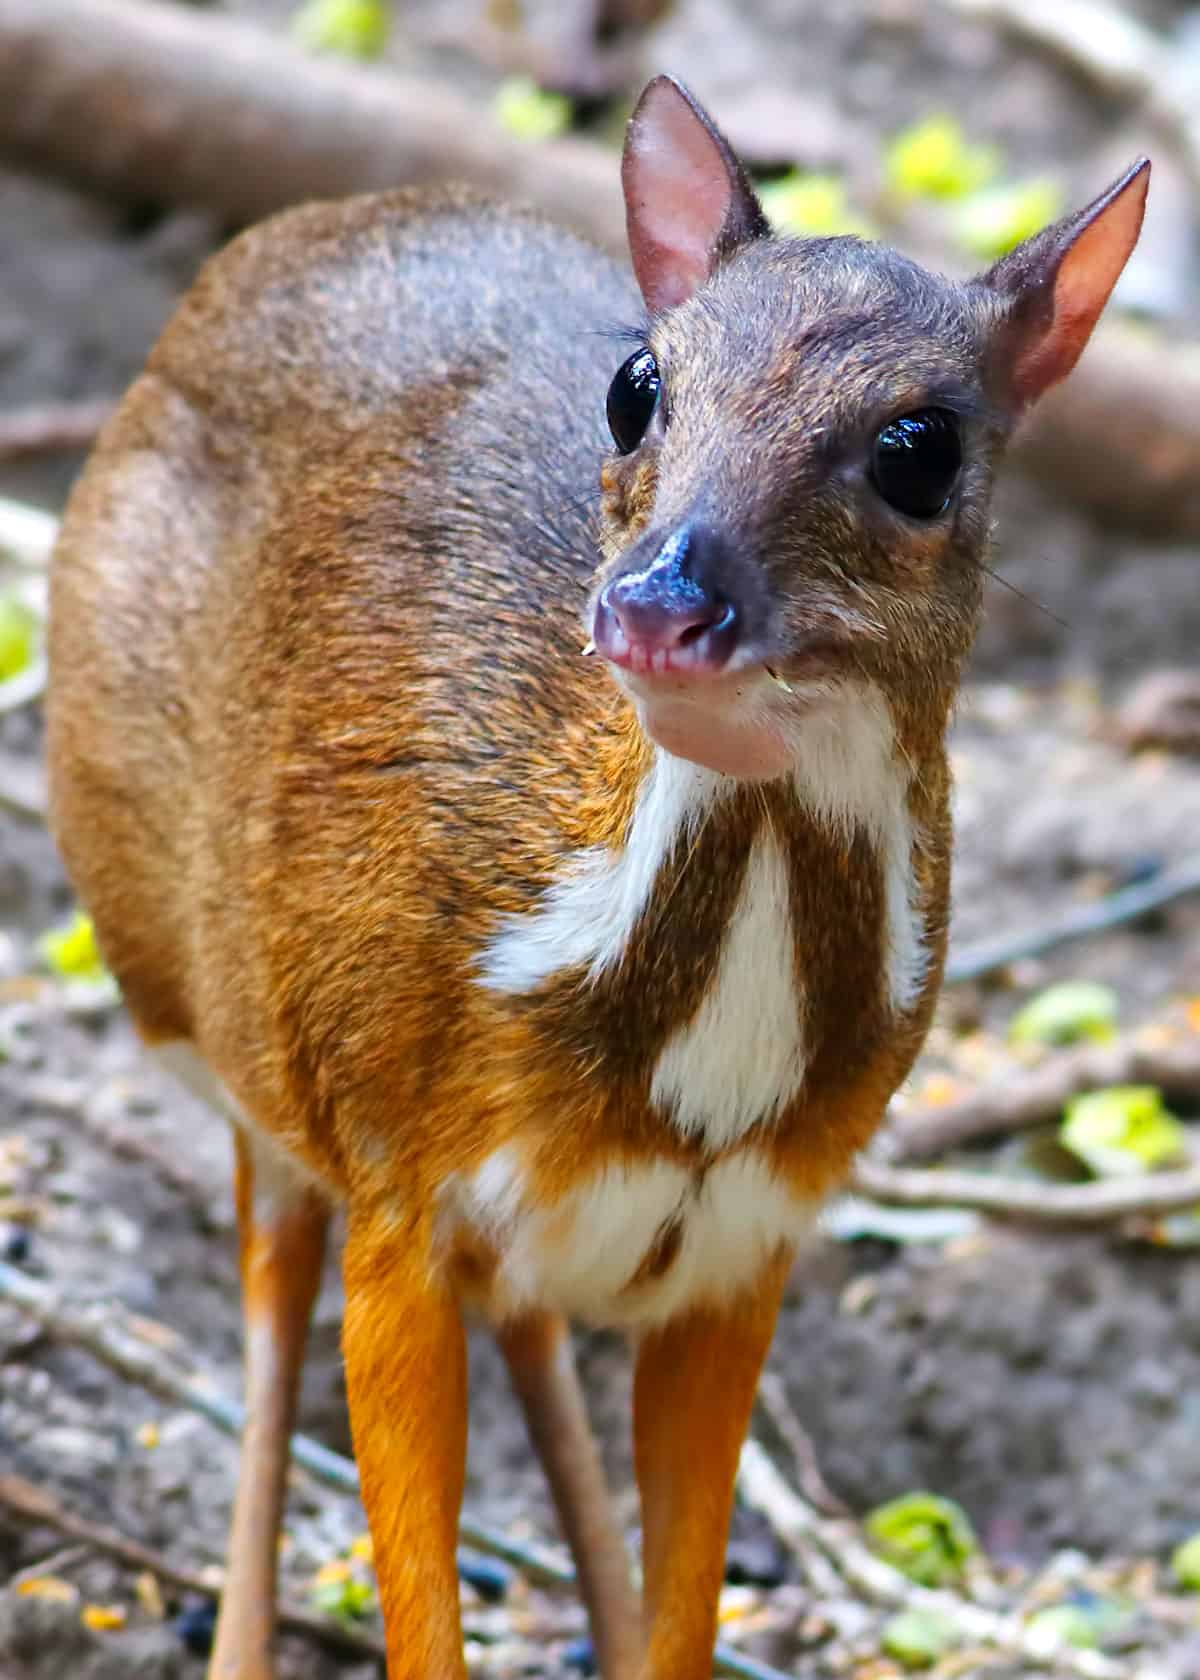 Mouse deer chevrotain